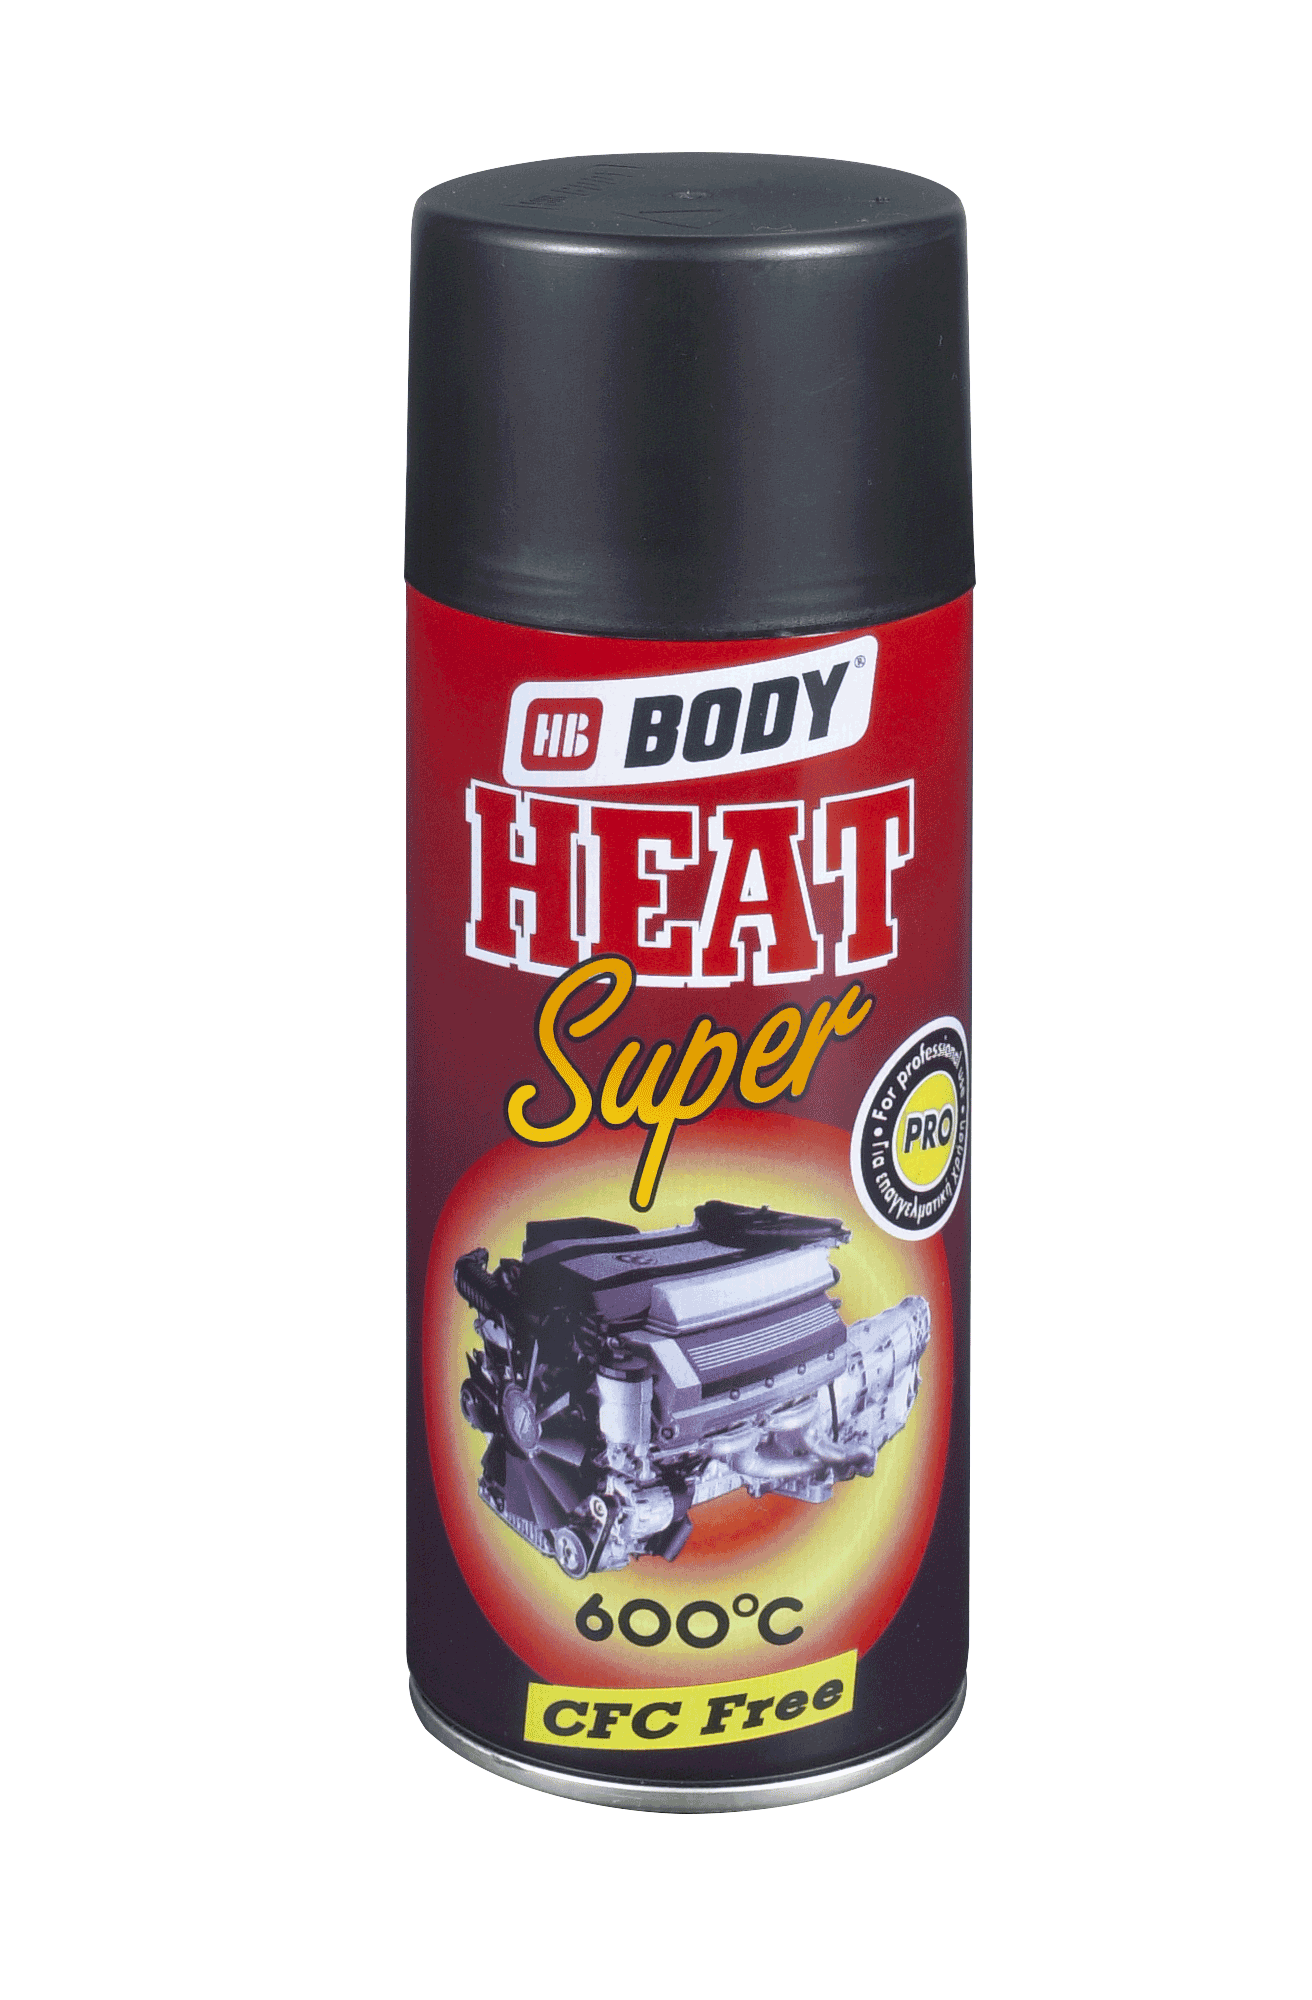 HB BODY BODY Heat Super 600°C Strieborná,400ml